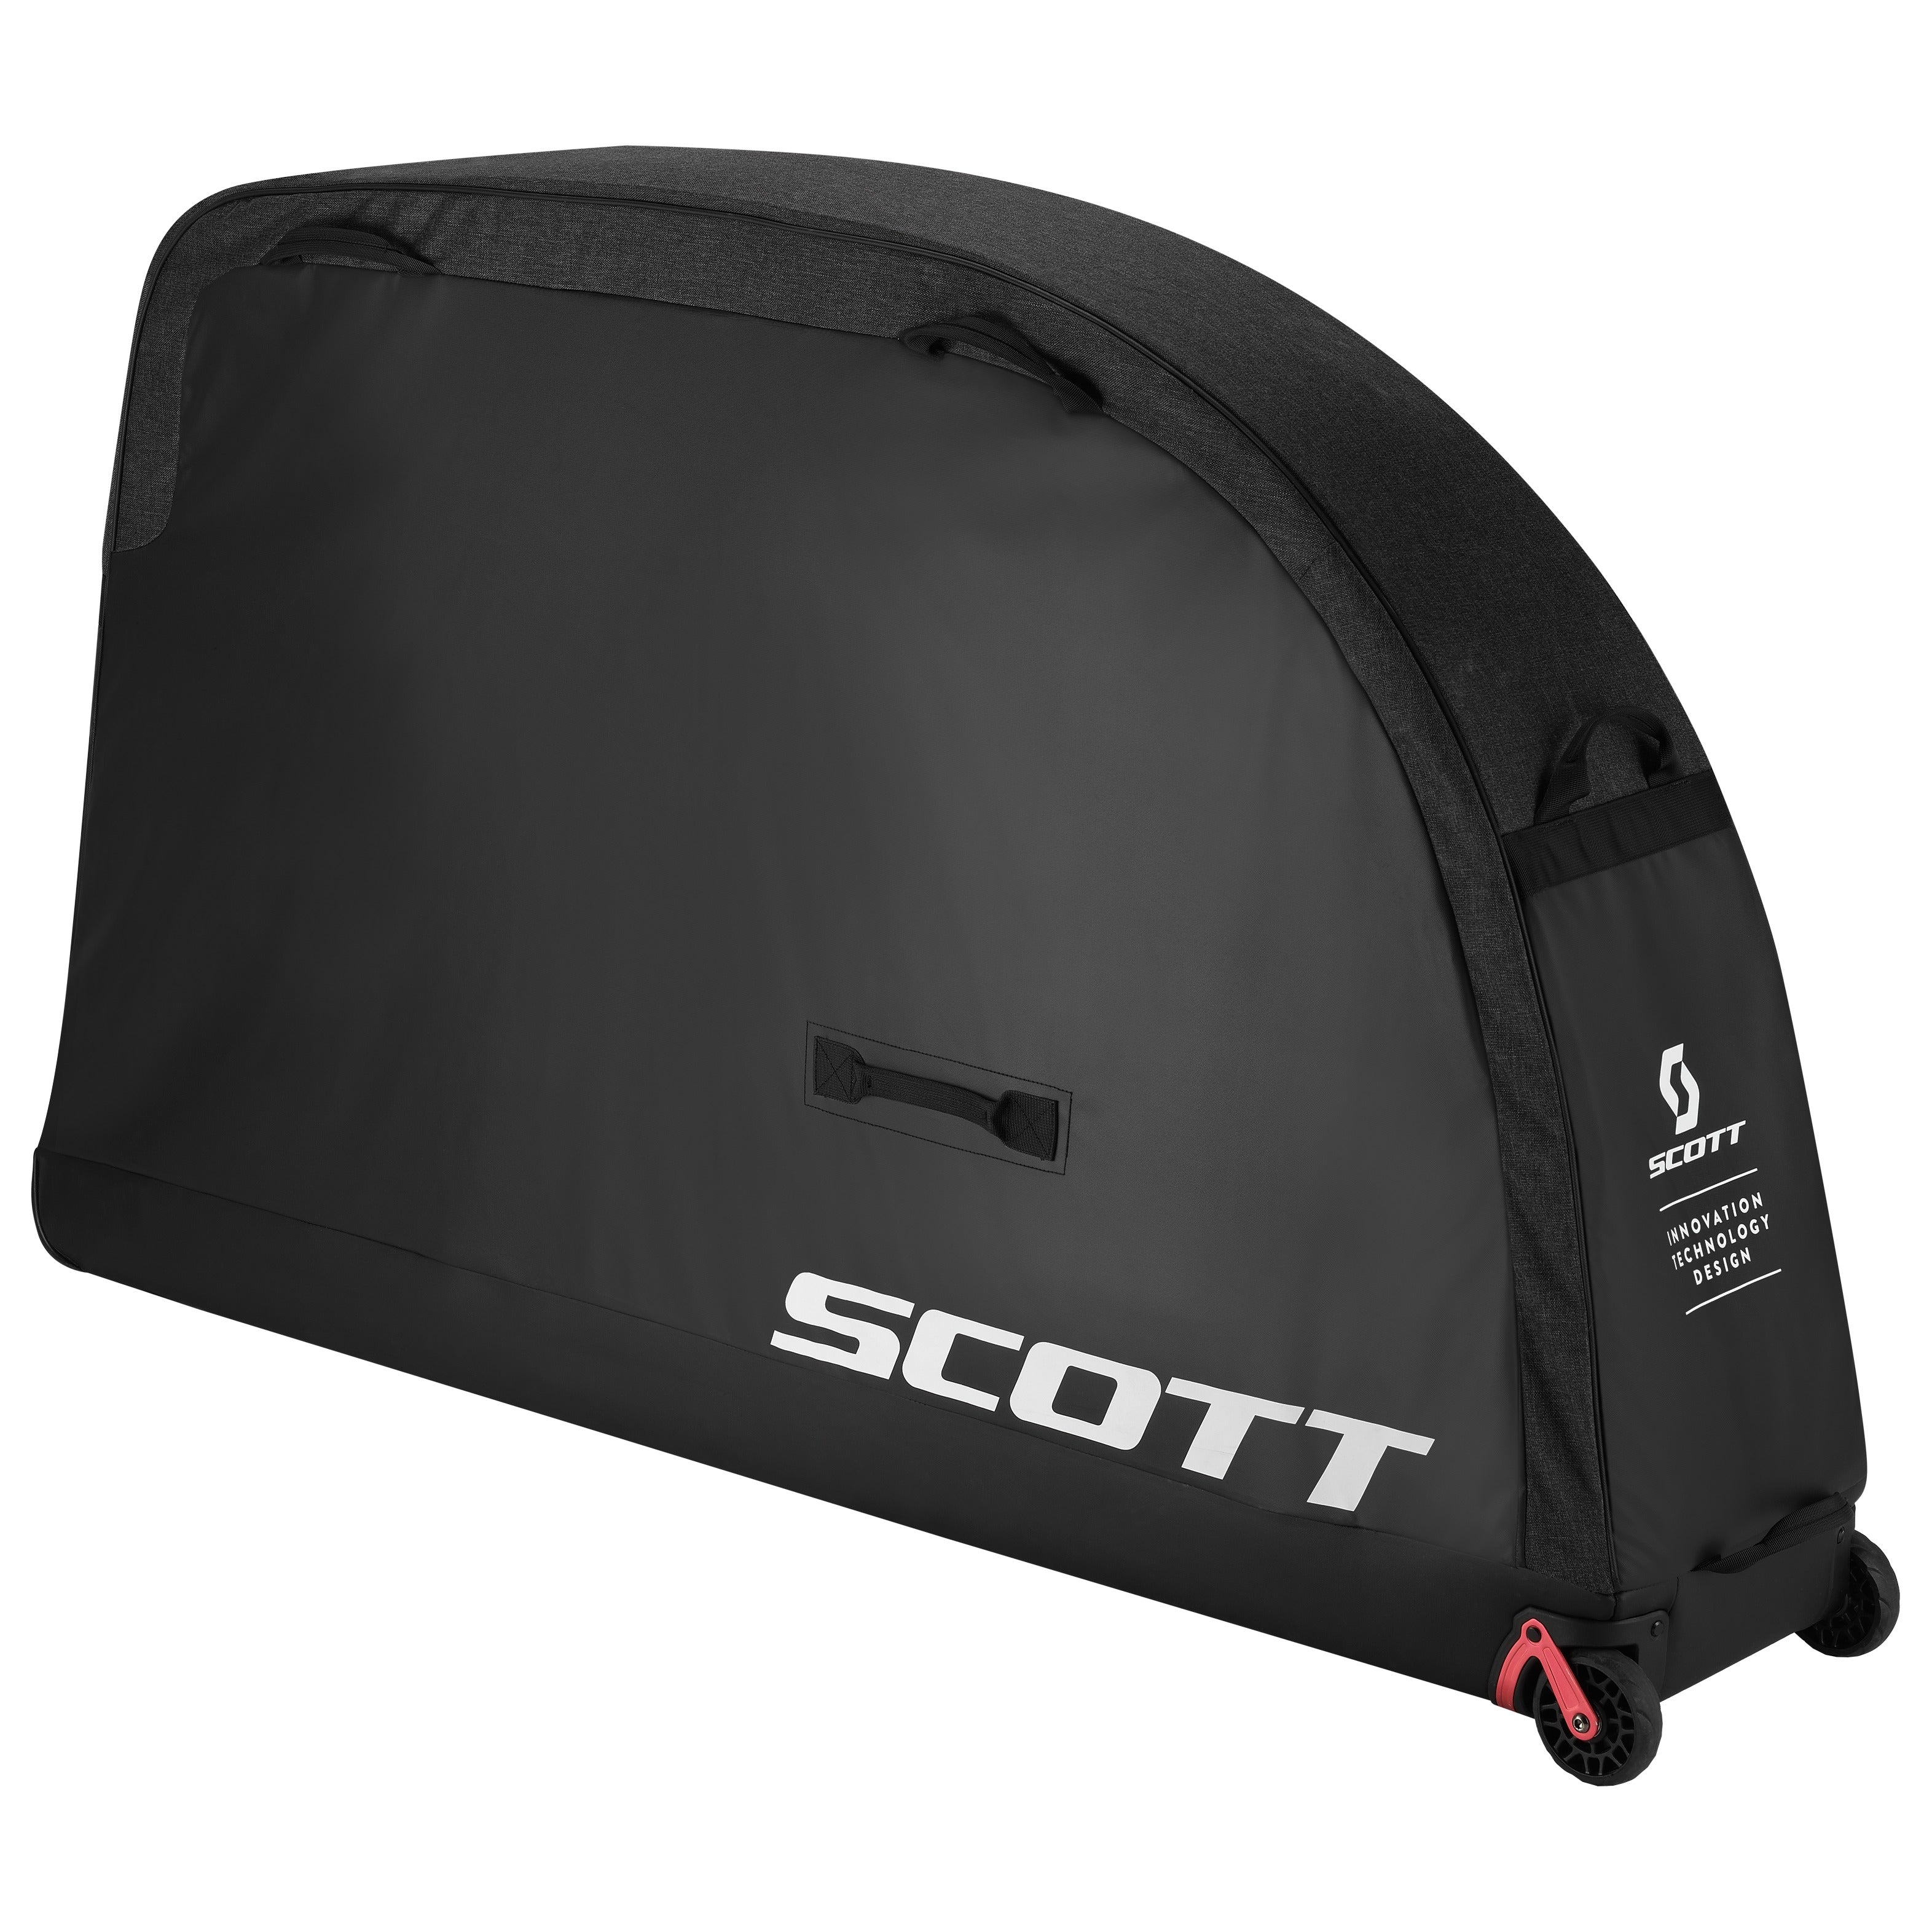 Box Scott Bag Store - www.edoc.com.vn 1693512515